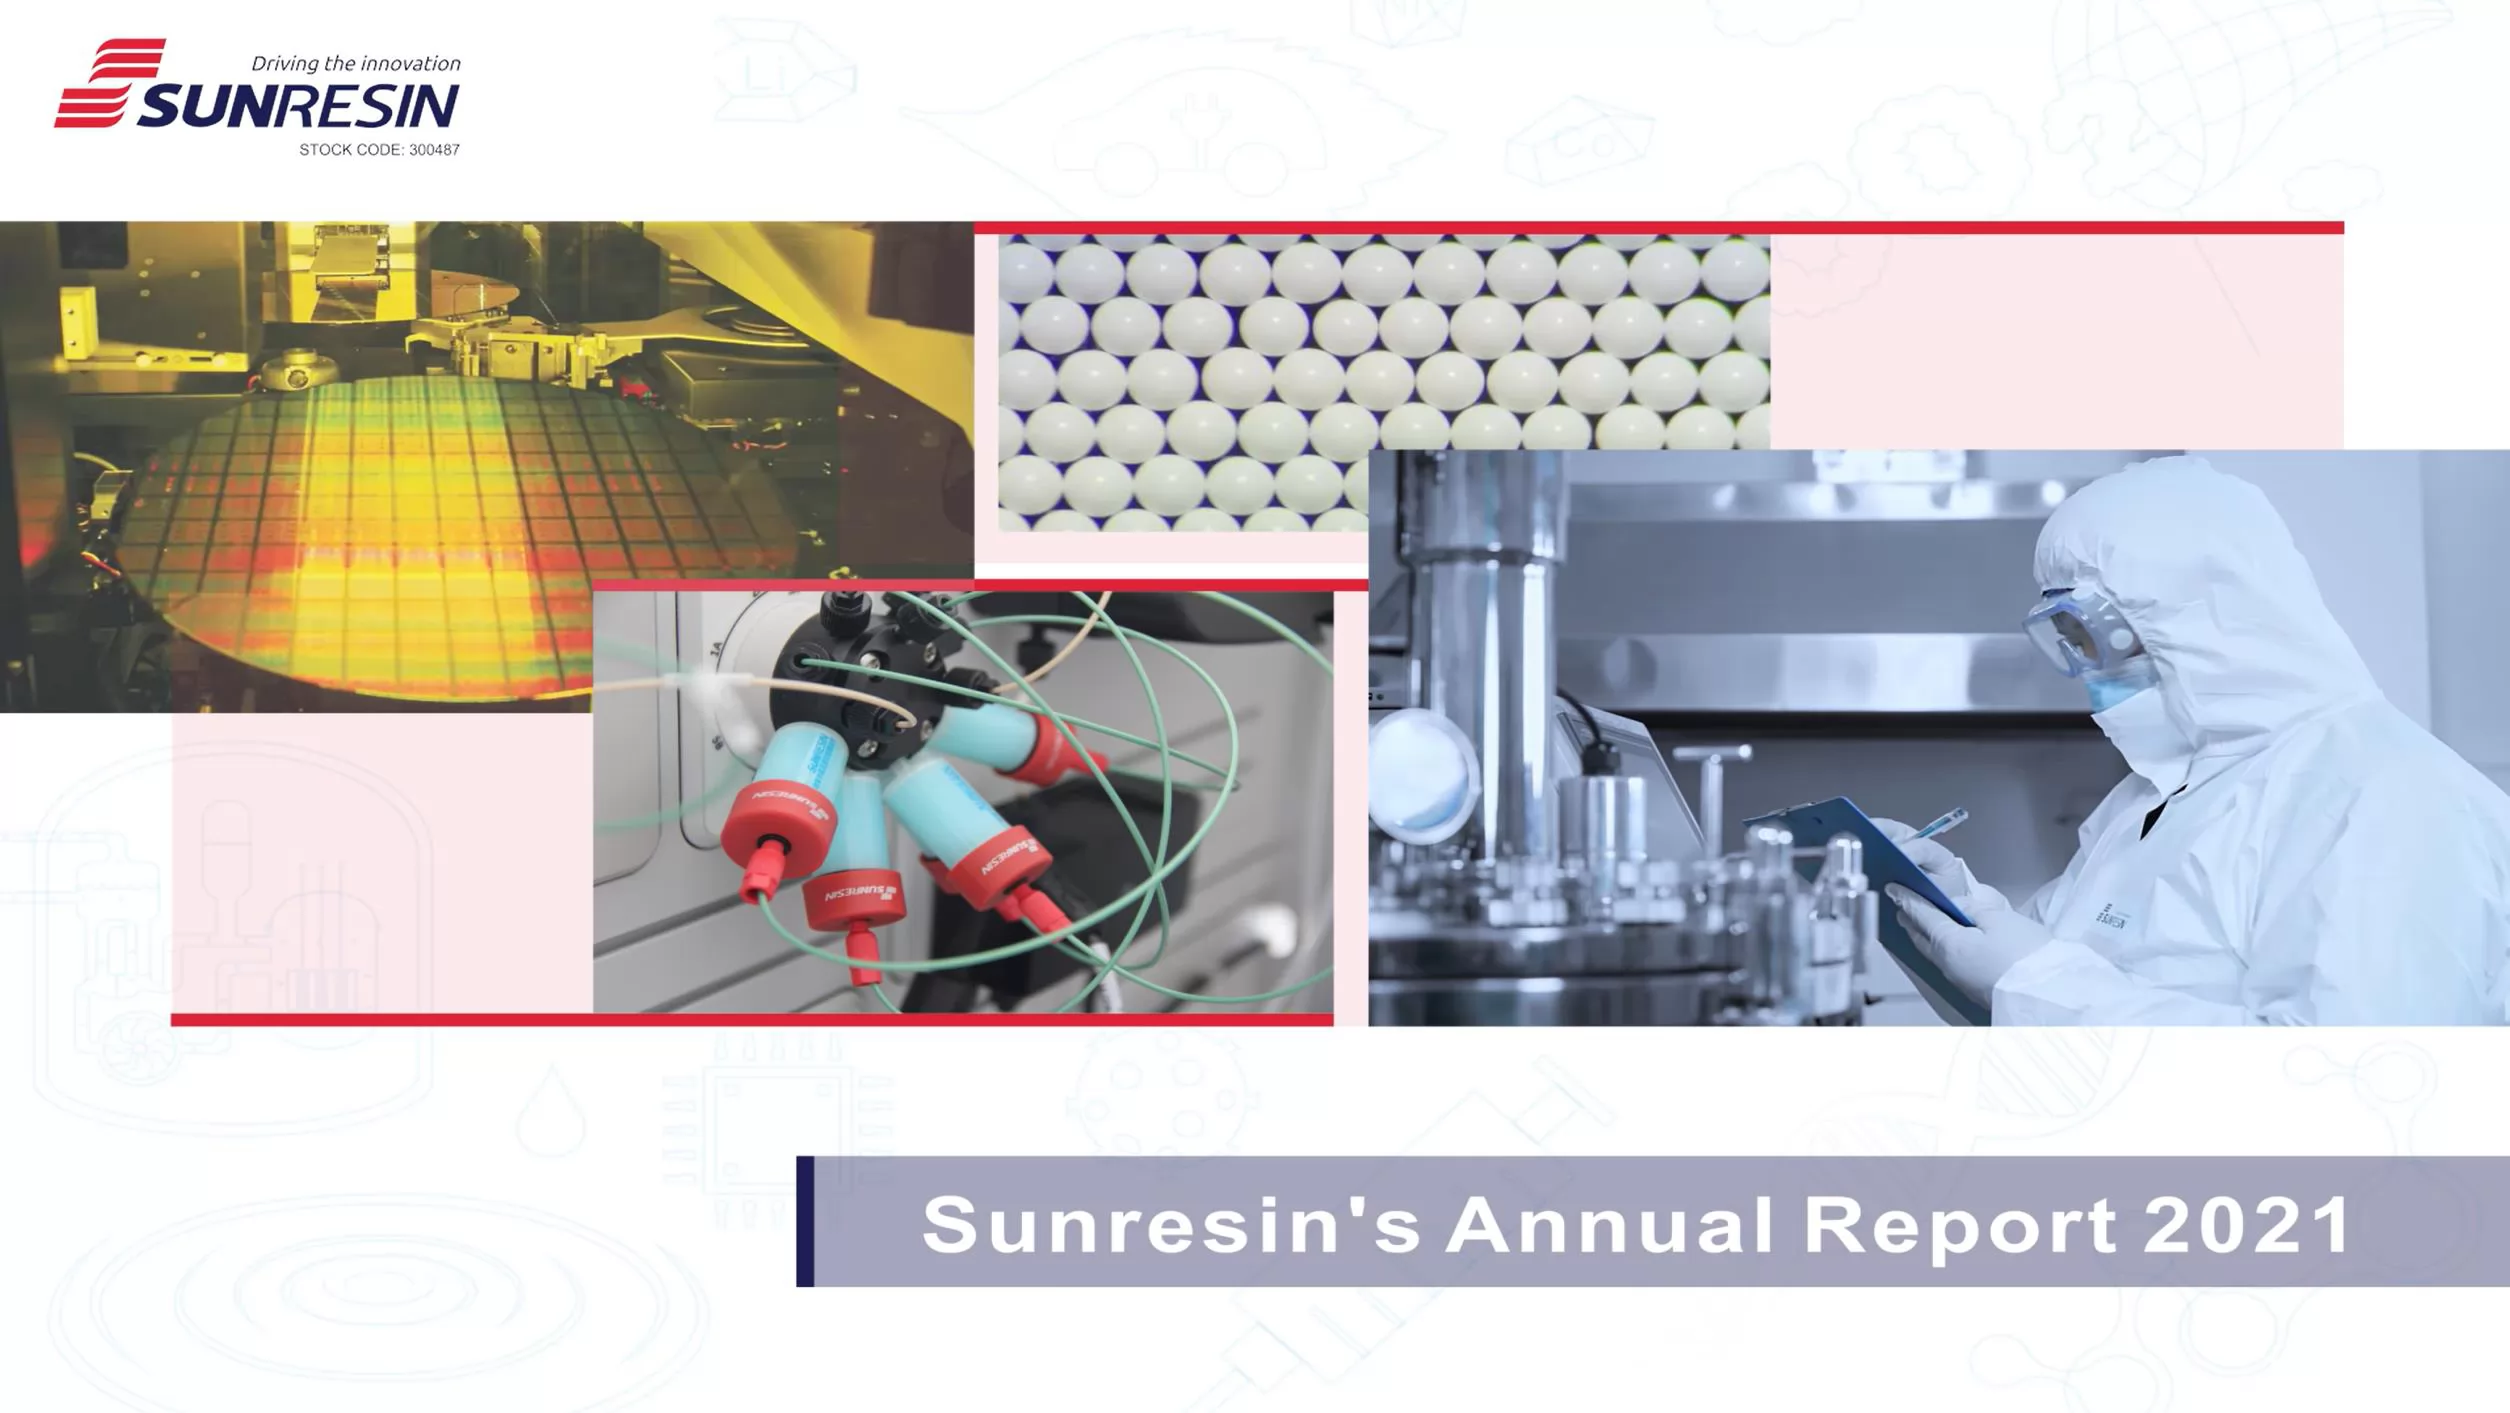 Sunresins Annual Report 2021